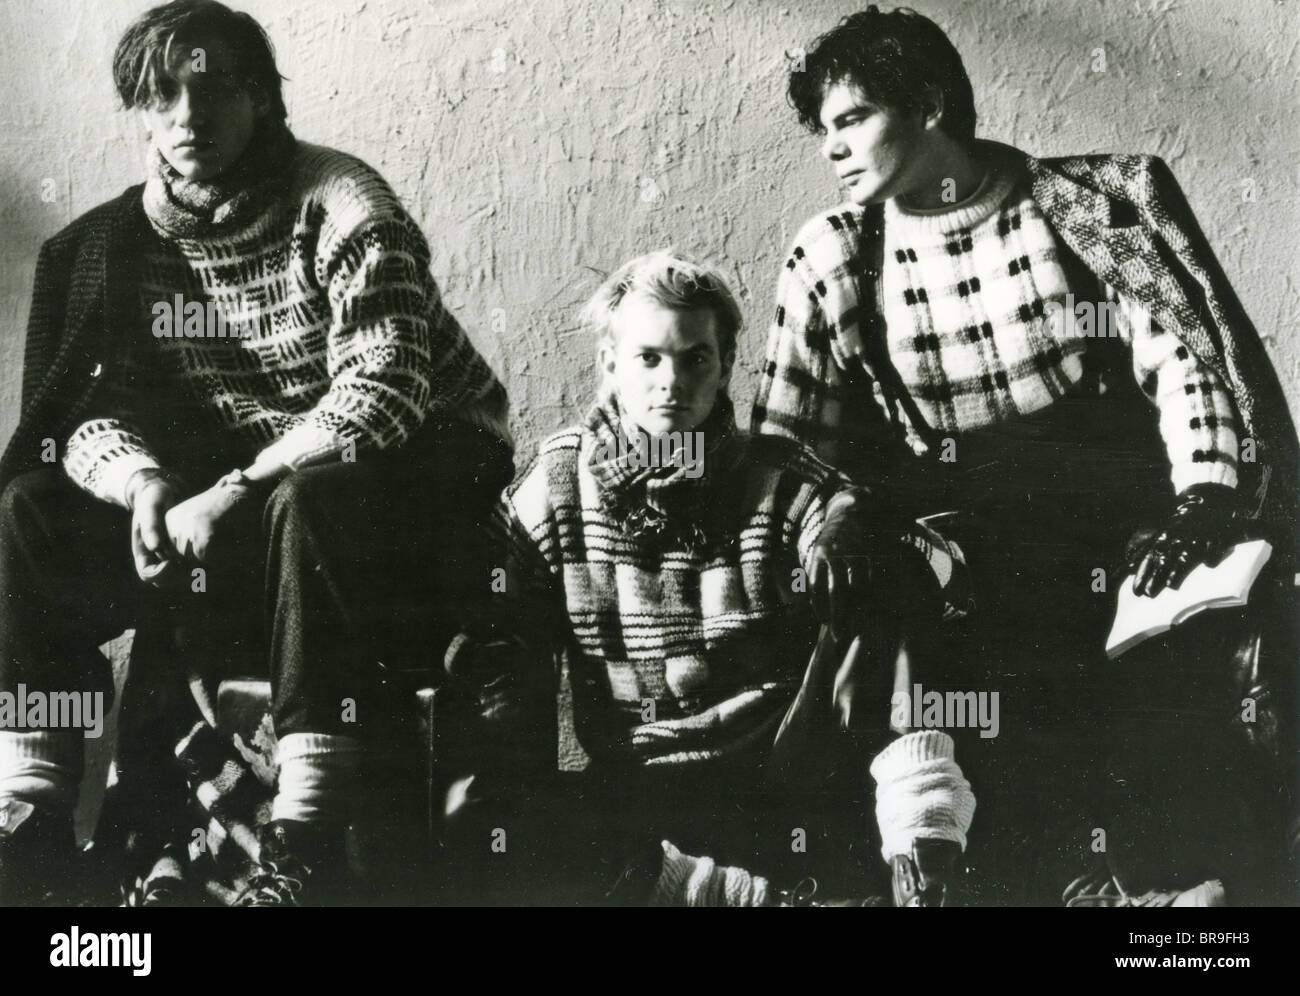 ALPHAVILLE Promotional photo of German group in April 1984. Stock Photo